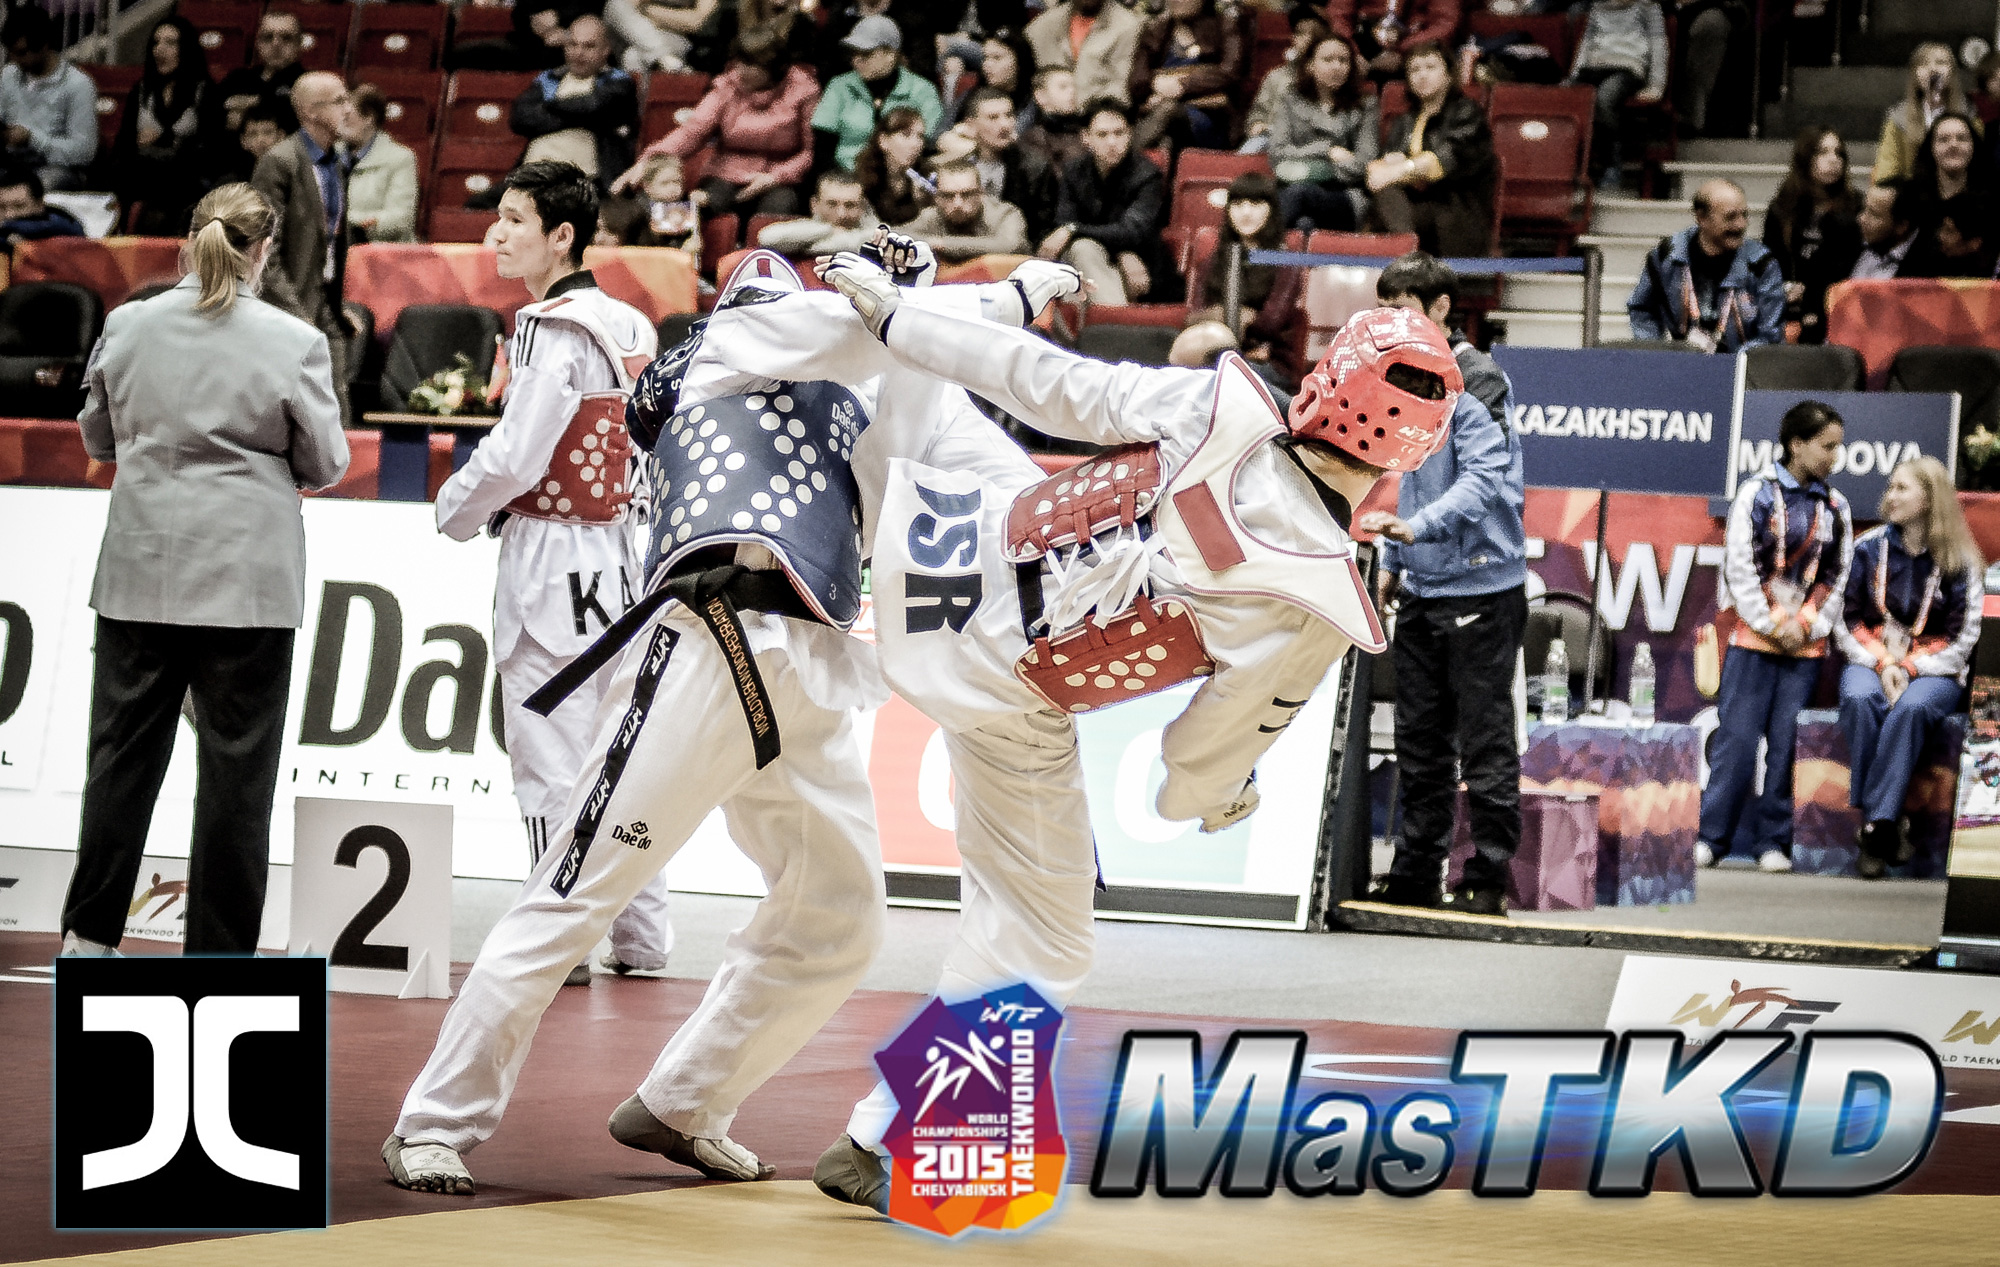 01_Mundial-Taekwondo_JCalicu-Seleccion-Mejor-Foto